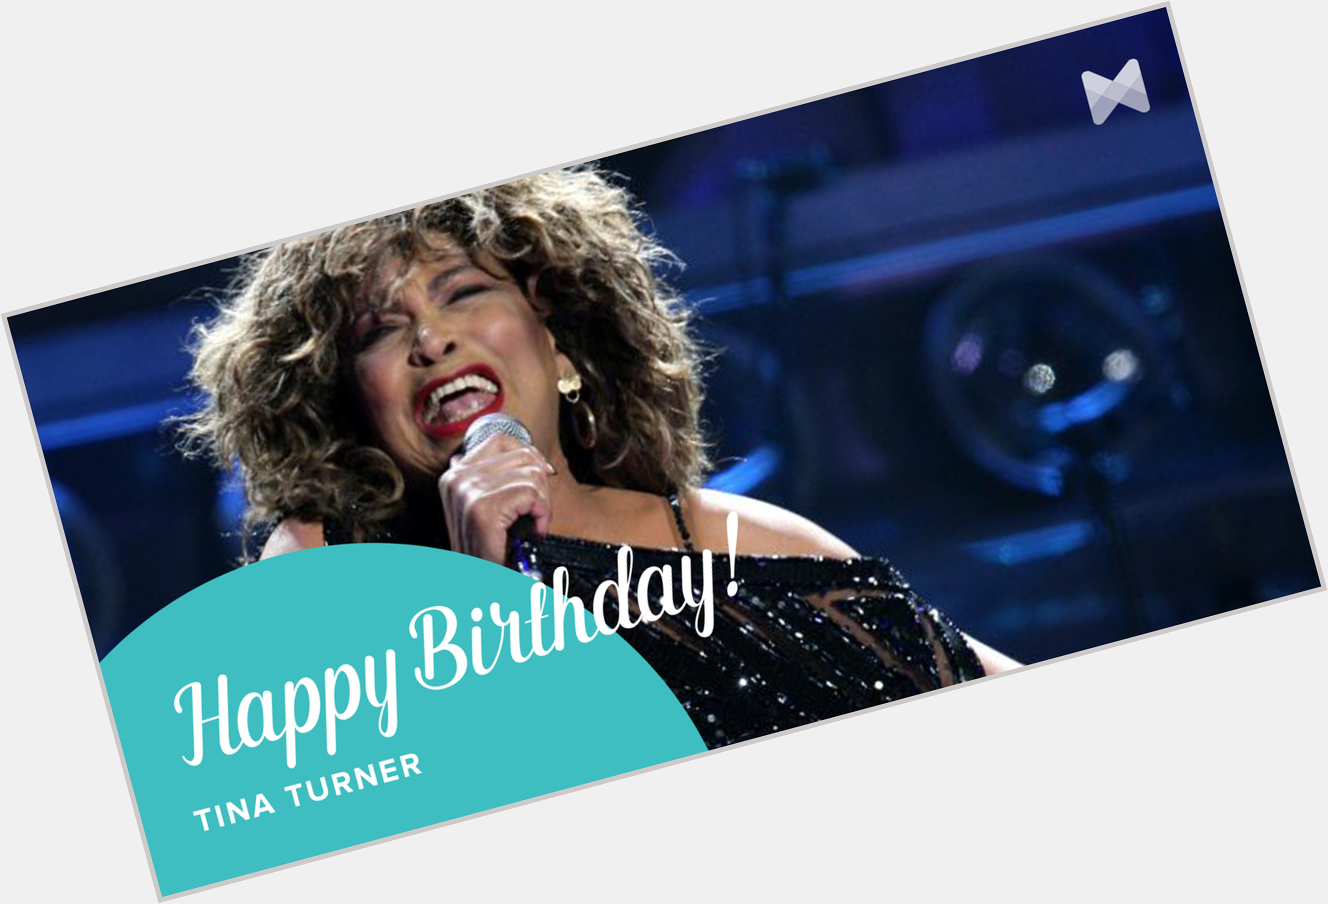 Tina Turner turns 76 today. Happy Birthday! 